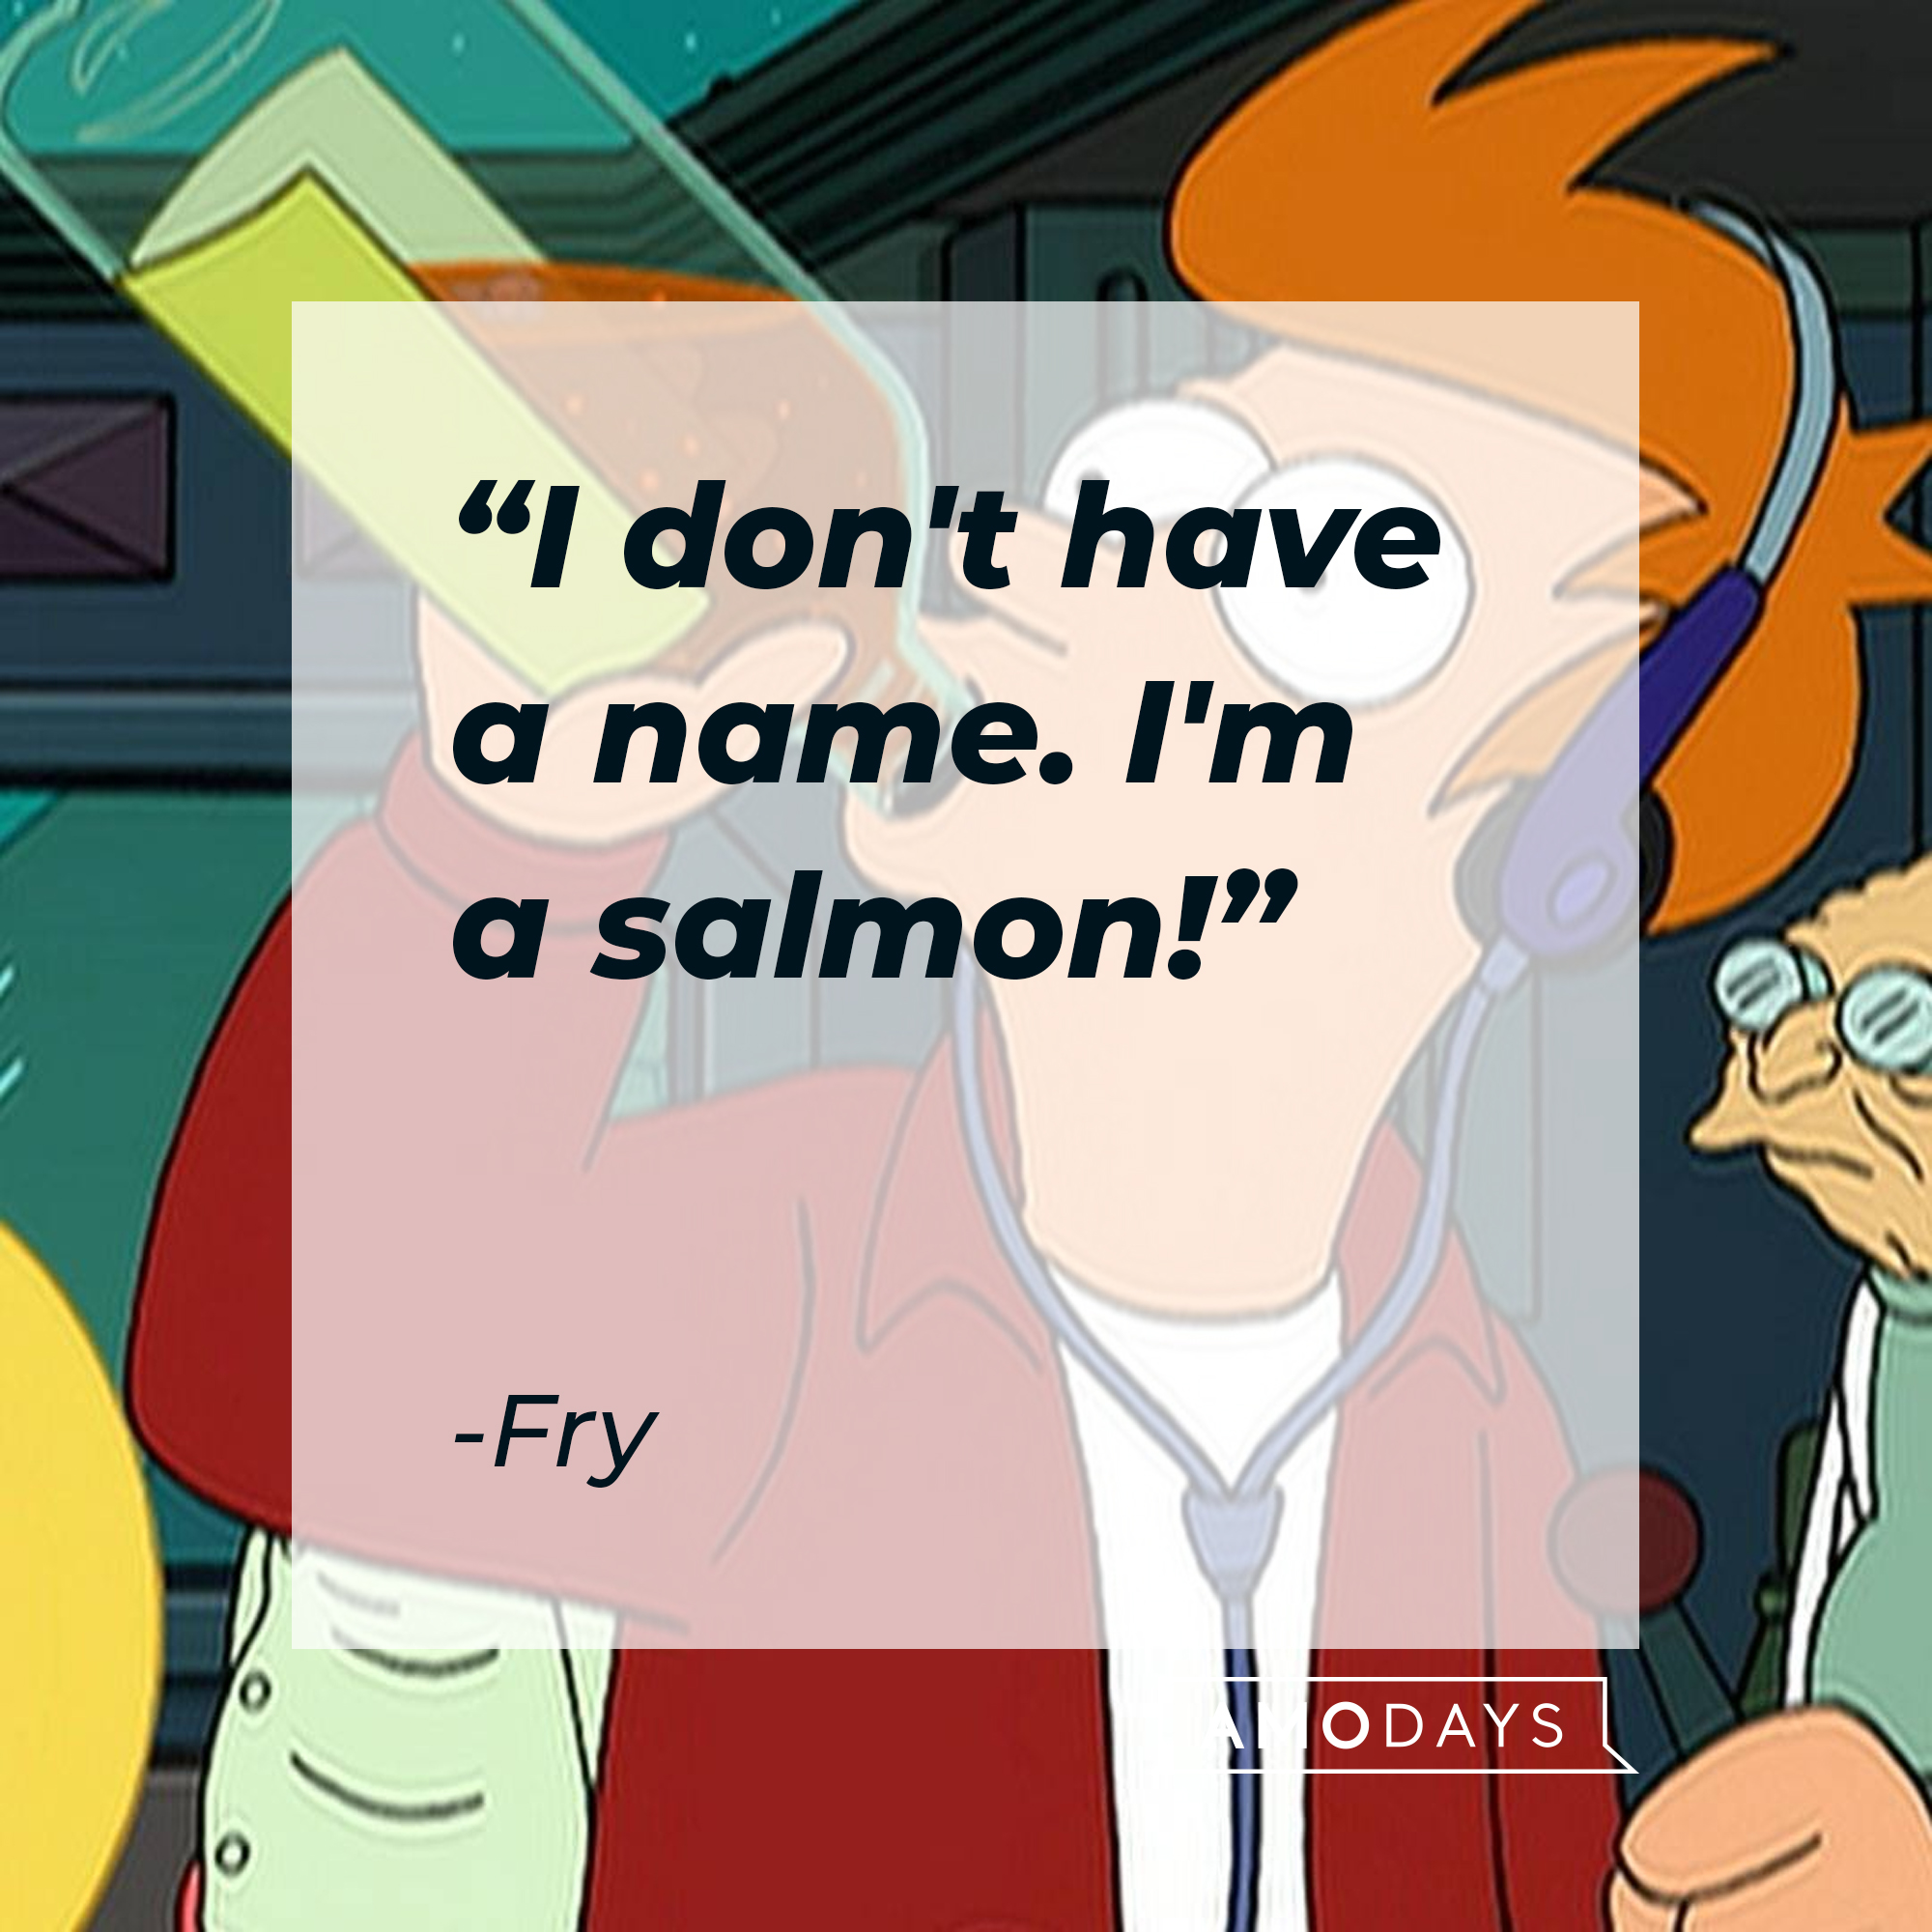 Fry Futurama's quote: "I don't have a name. I'm a salmon!" | Source: Facebook.com/Futurama